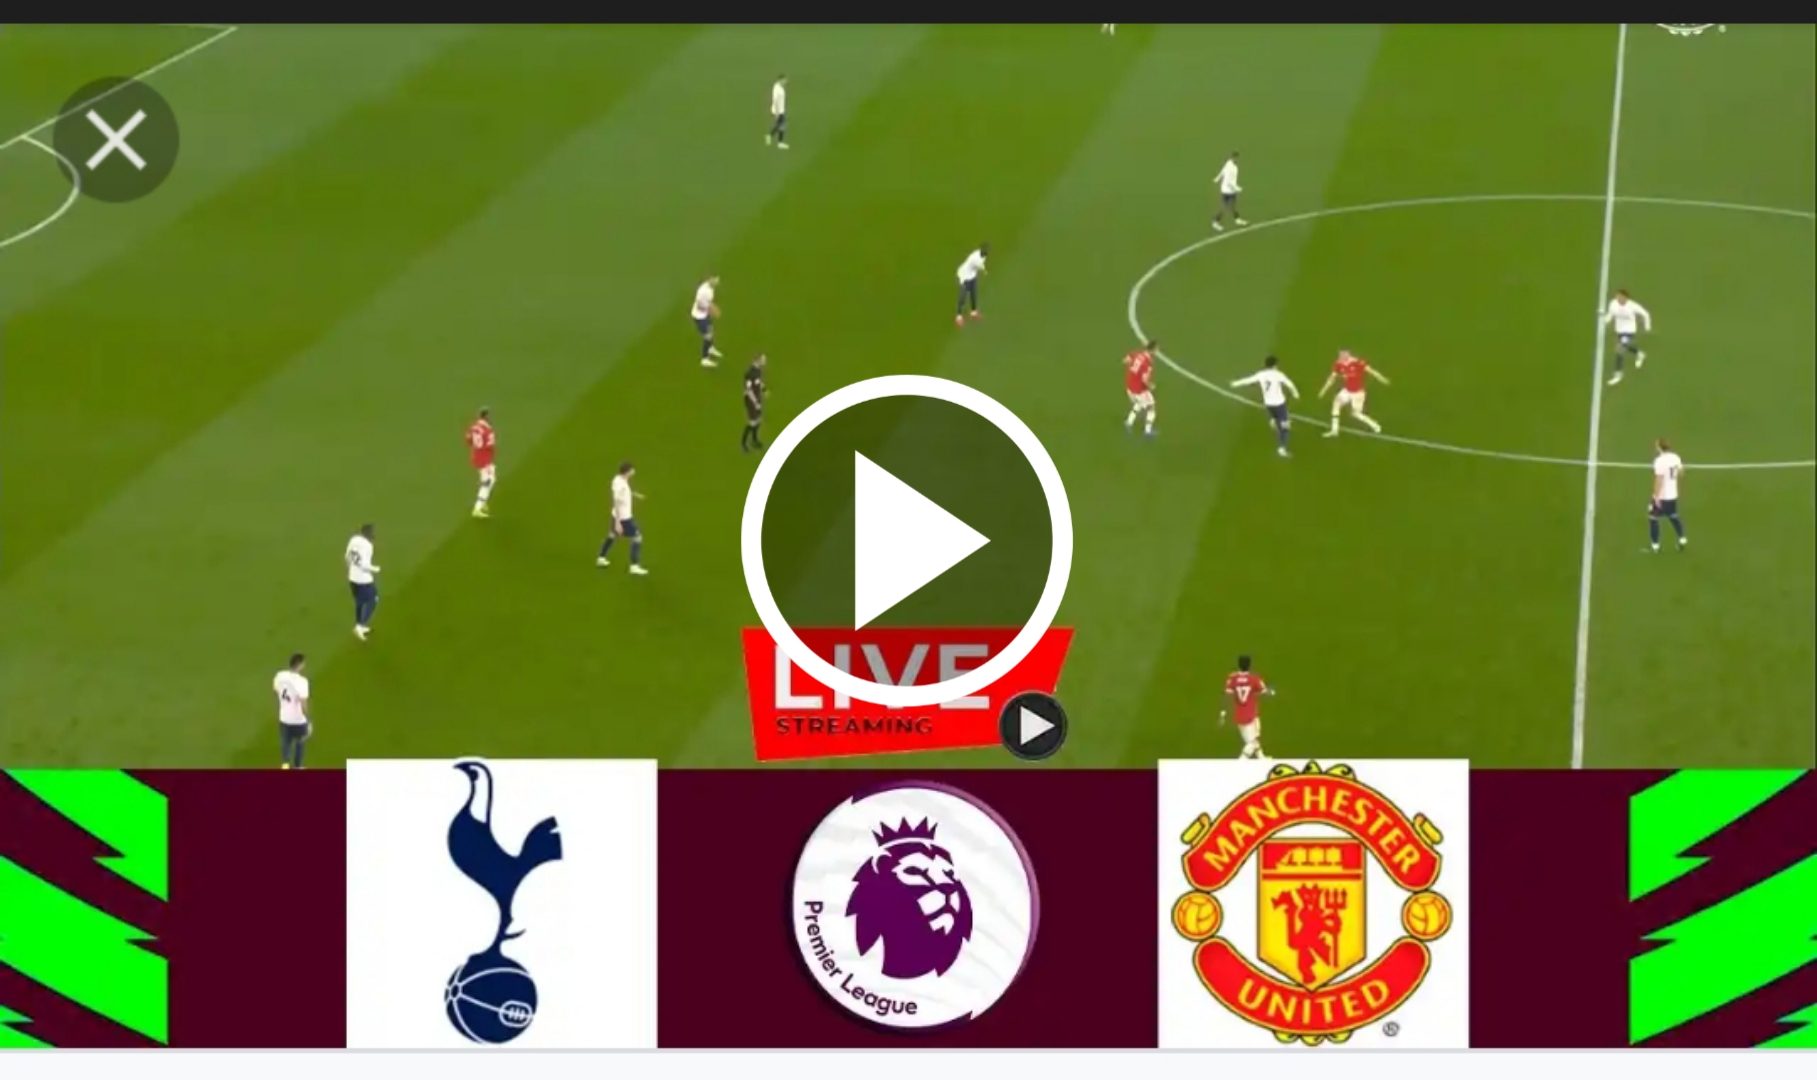 Live stream: Watch Tottenham vs Man United LIVE | Premier league _English commentary 1 Sportelo